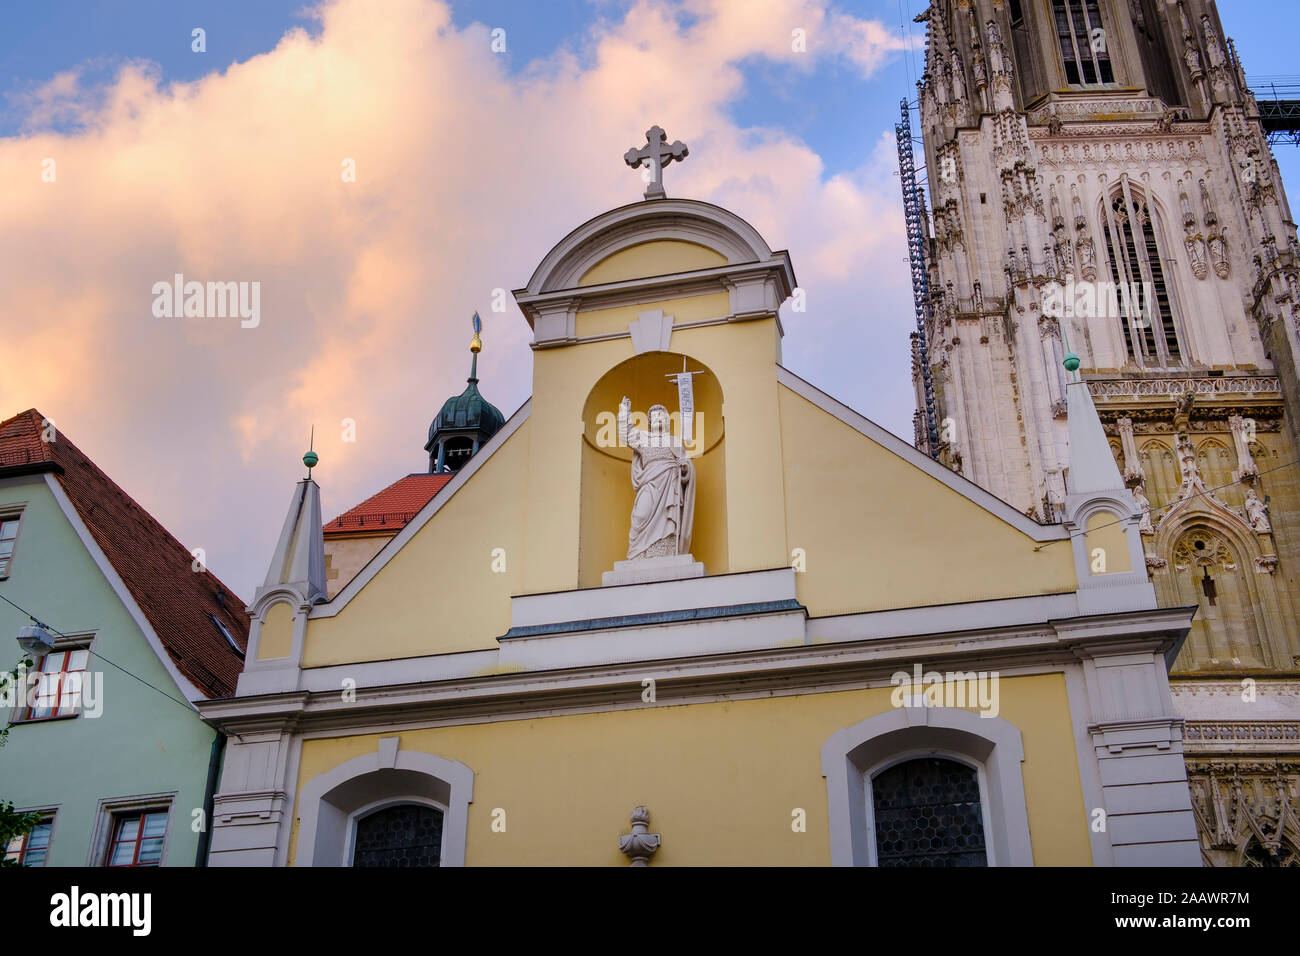 Collegiate church of Sankt Johann against cloudy sky, Regensburg, Upper Palatinate, Bavaria, Germany Stock Photo